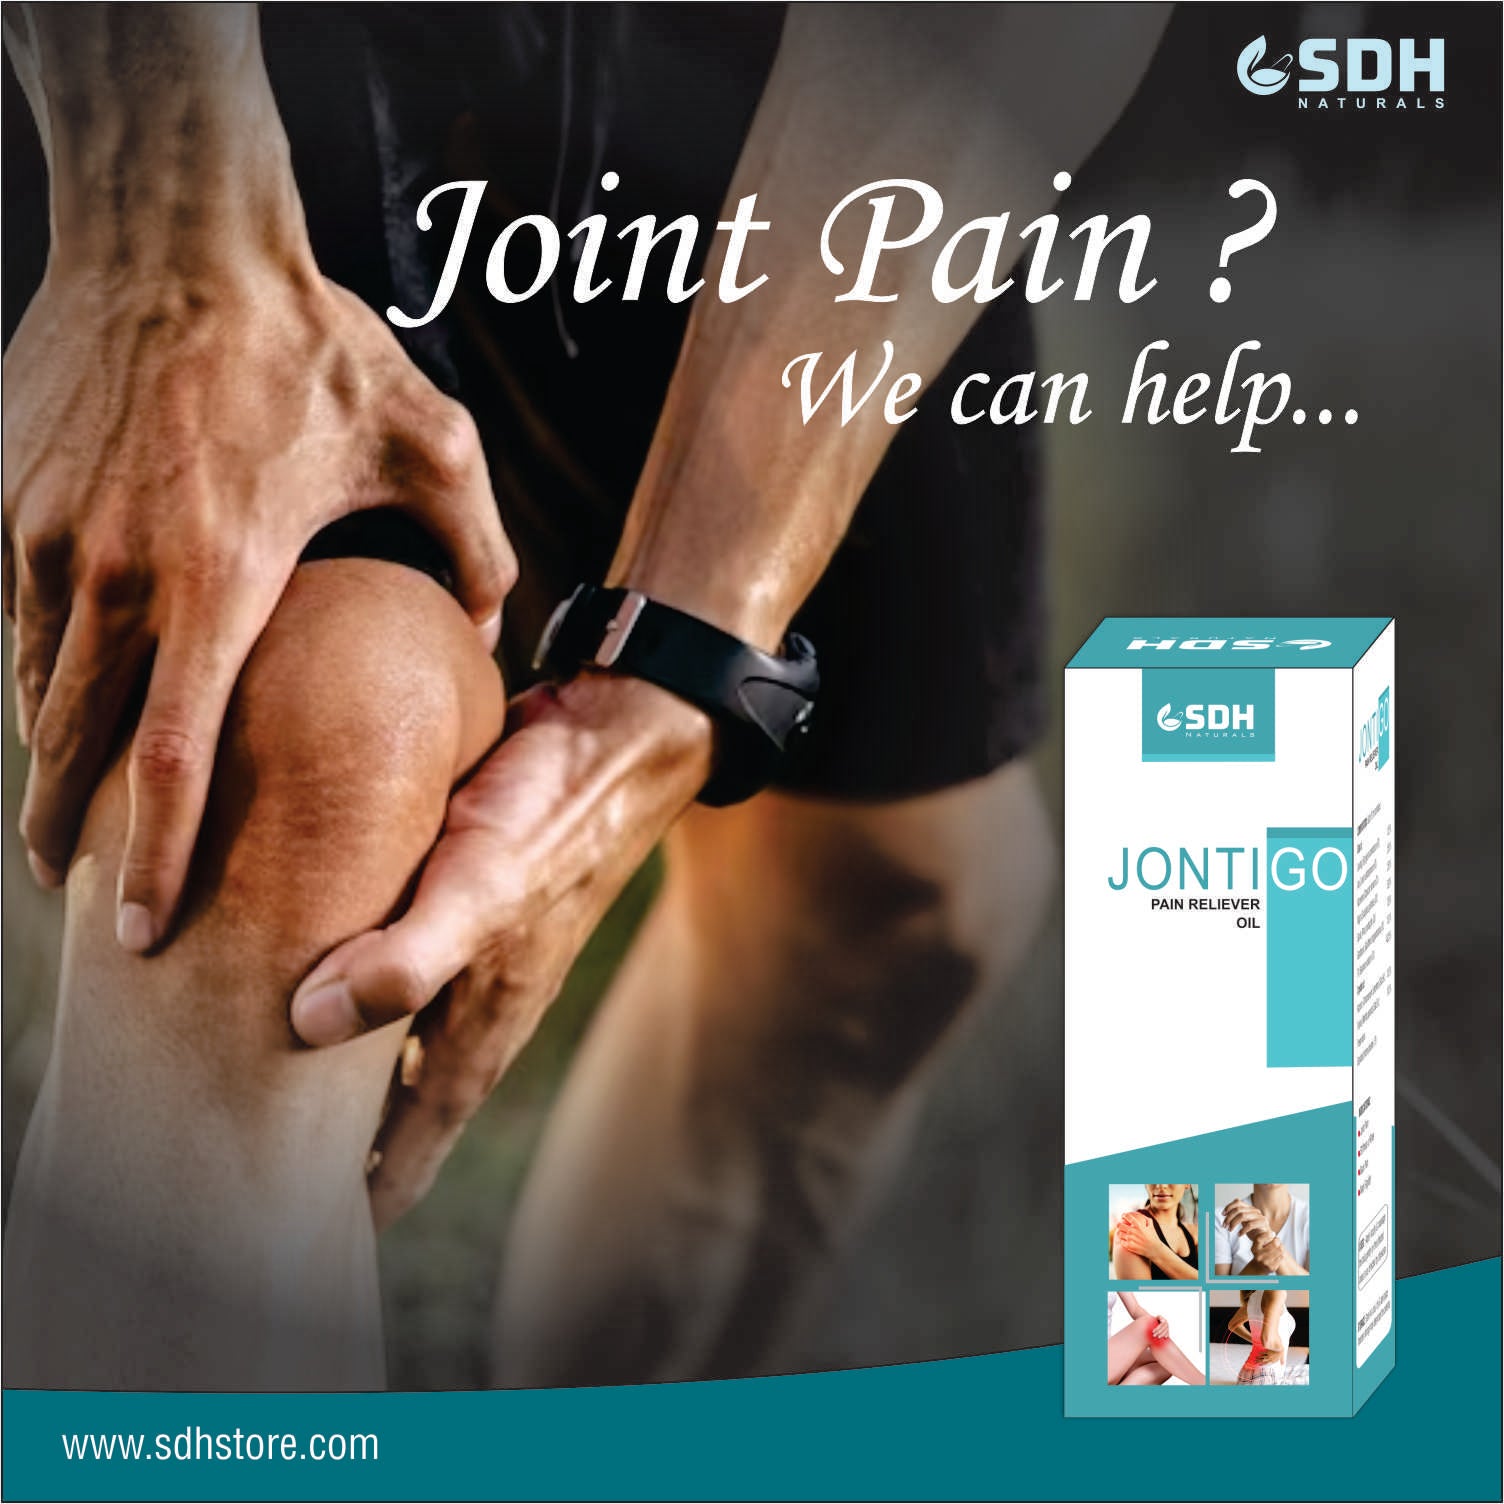 Jontigo Oil for Joint Pain